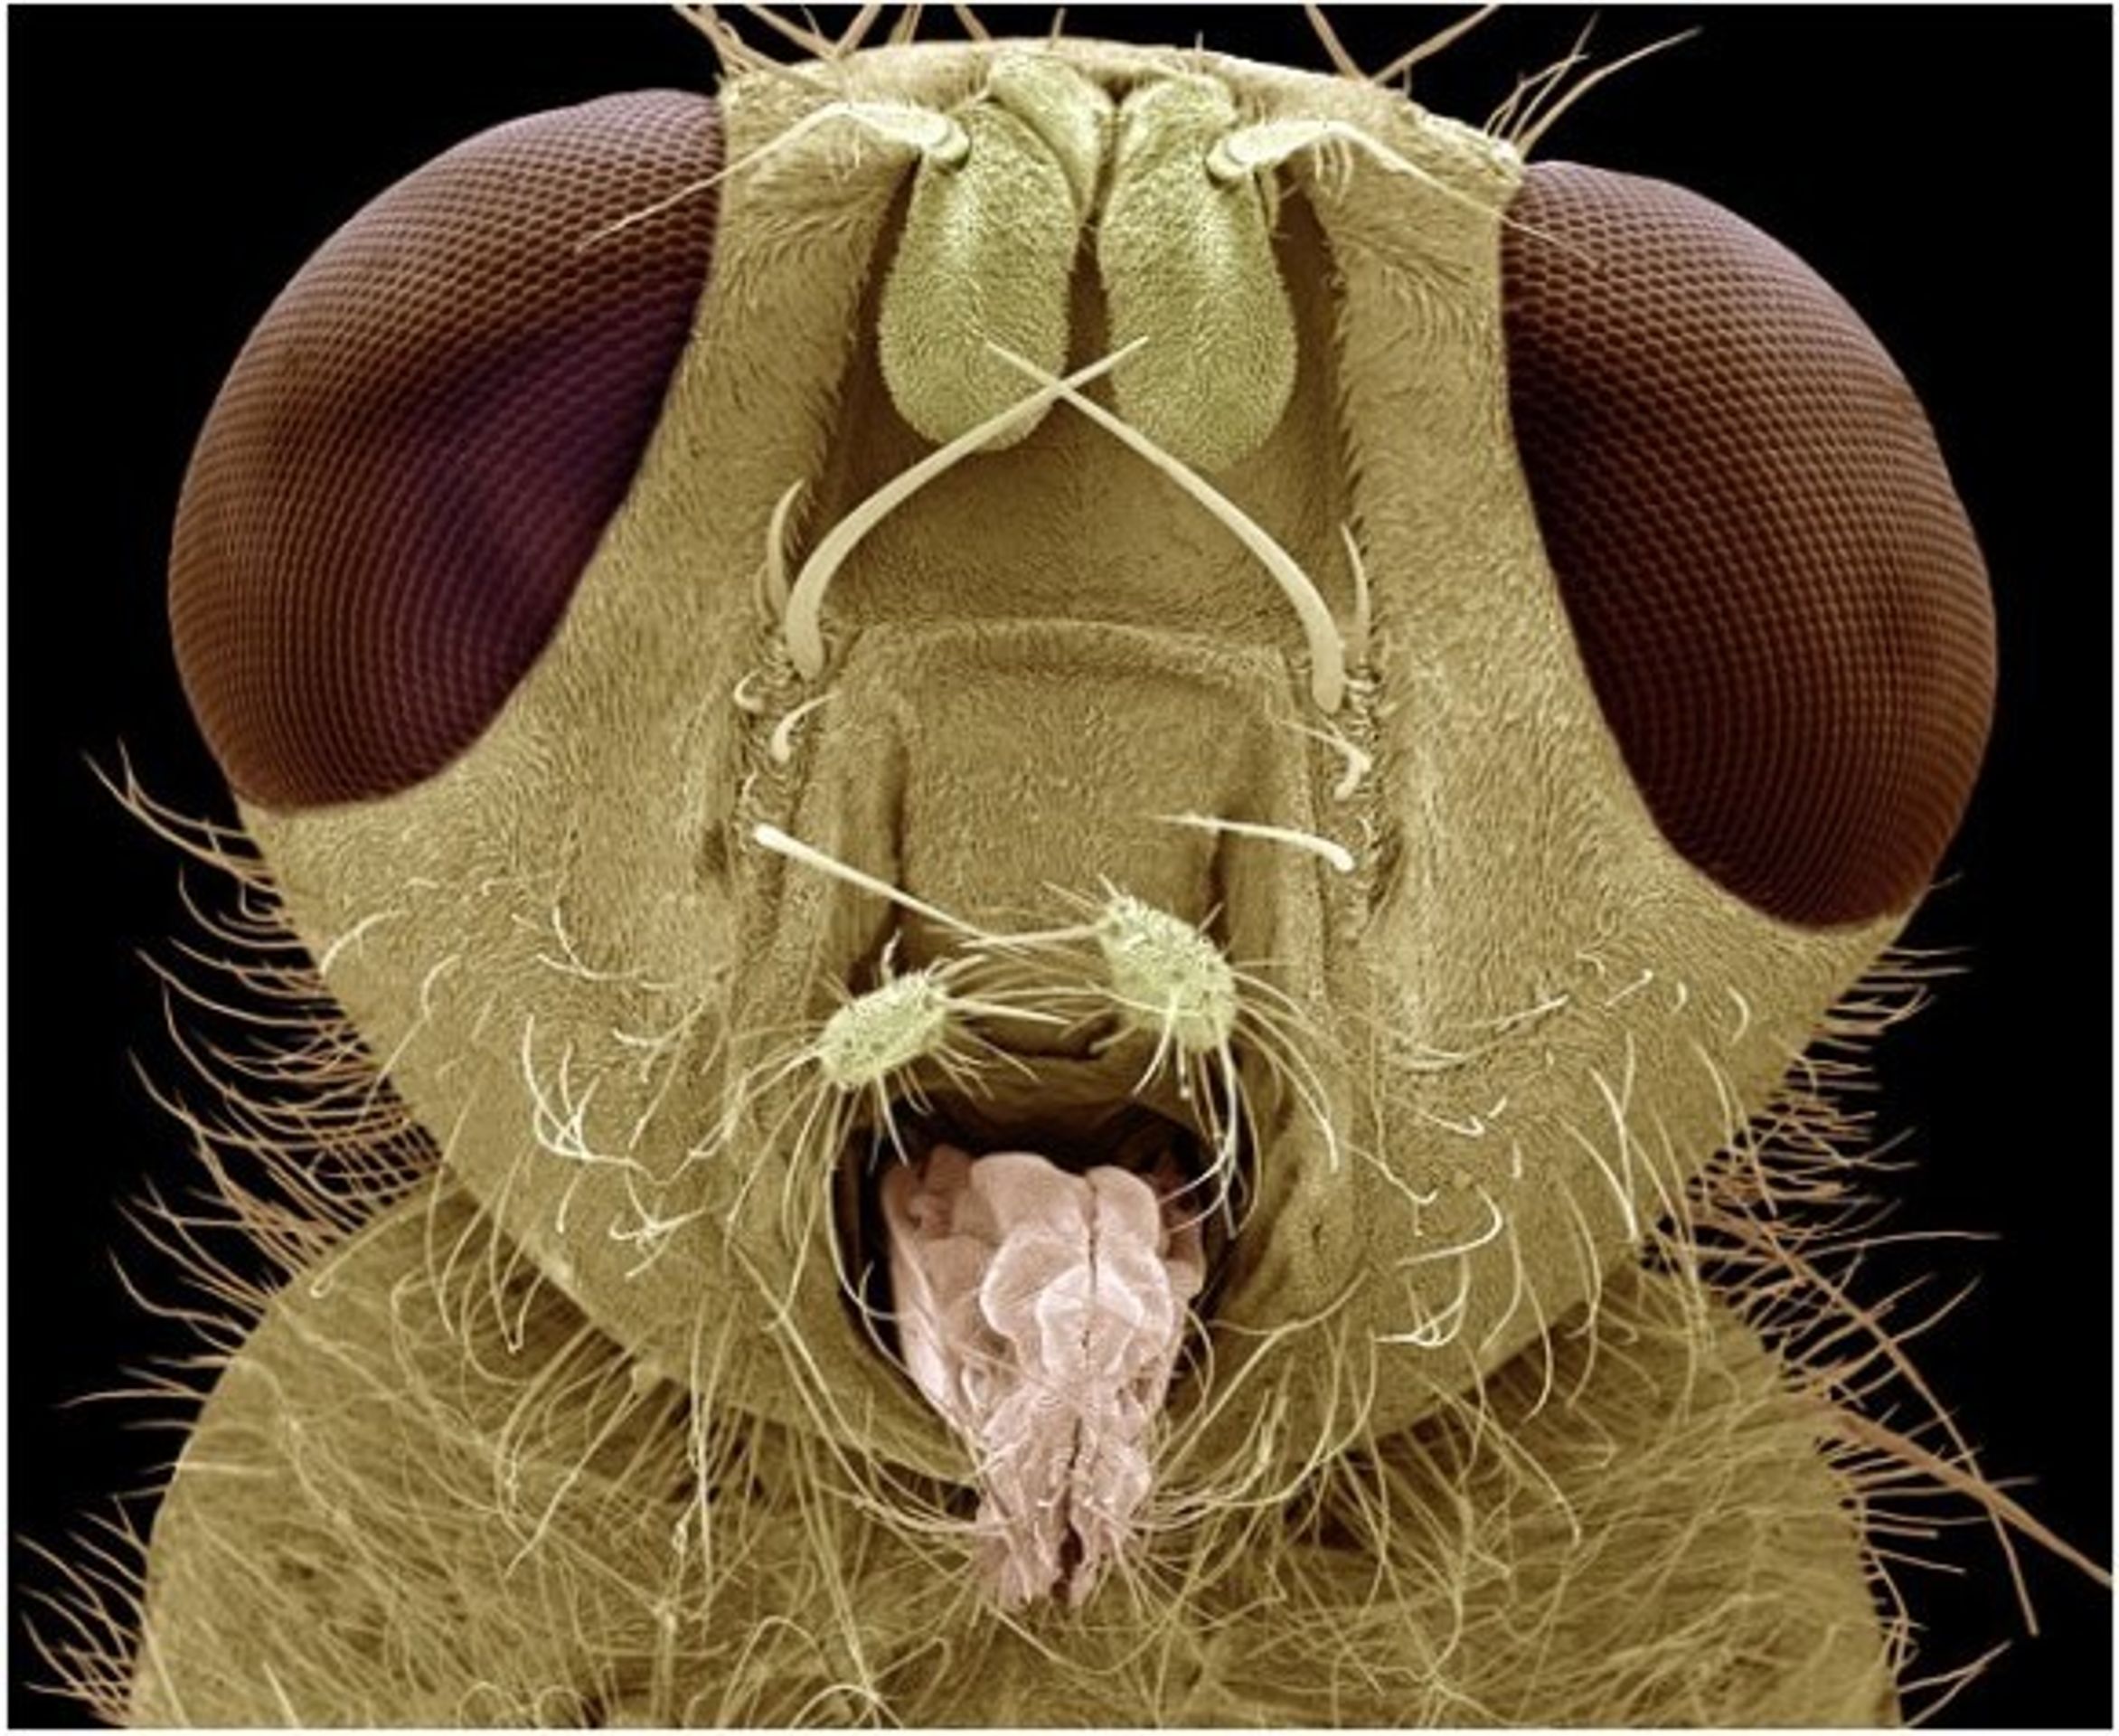 Hmyz pod elektronovým mikroskopem - 15 - GALERIE: Hmyz pod elektronovým mikroskopem (7/20)